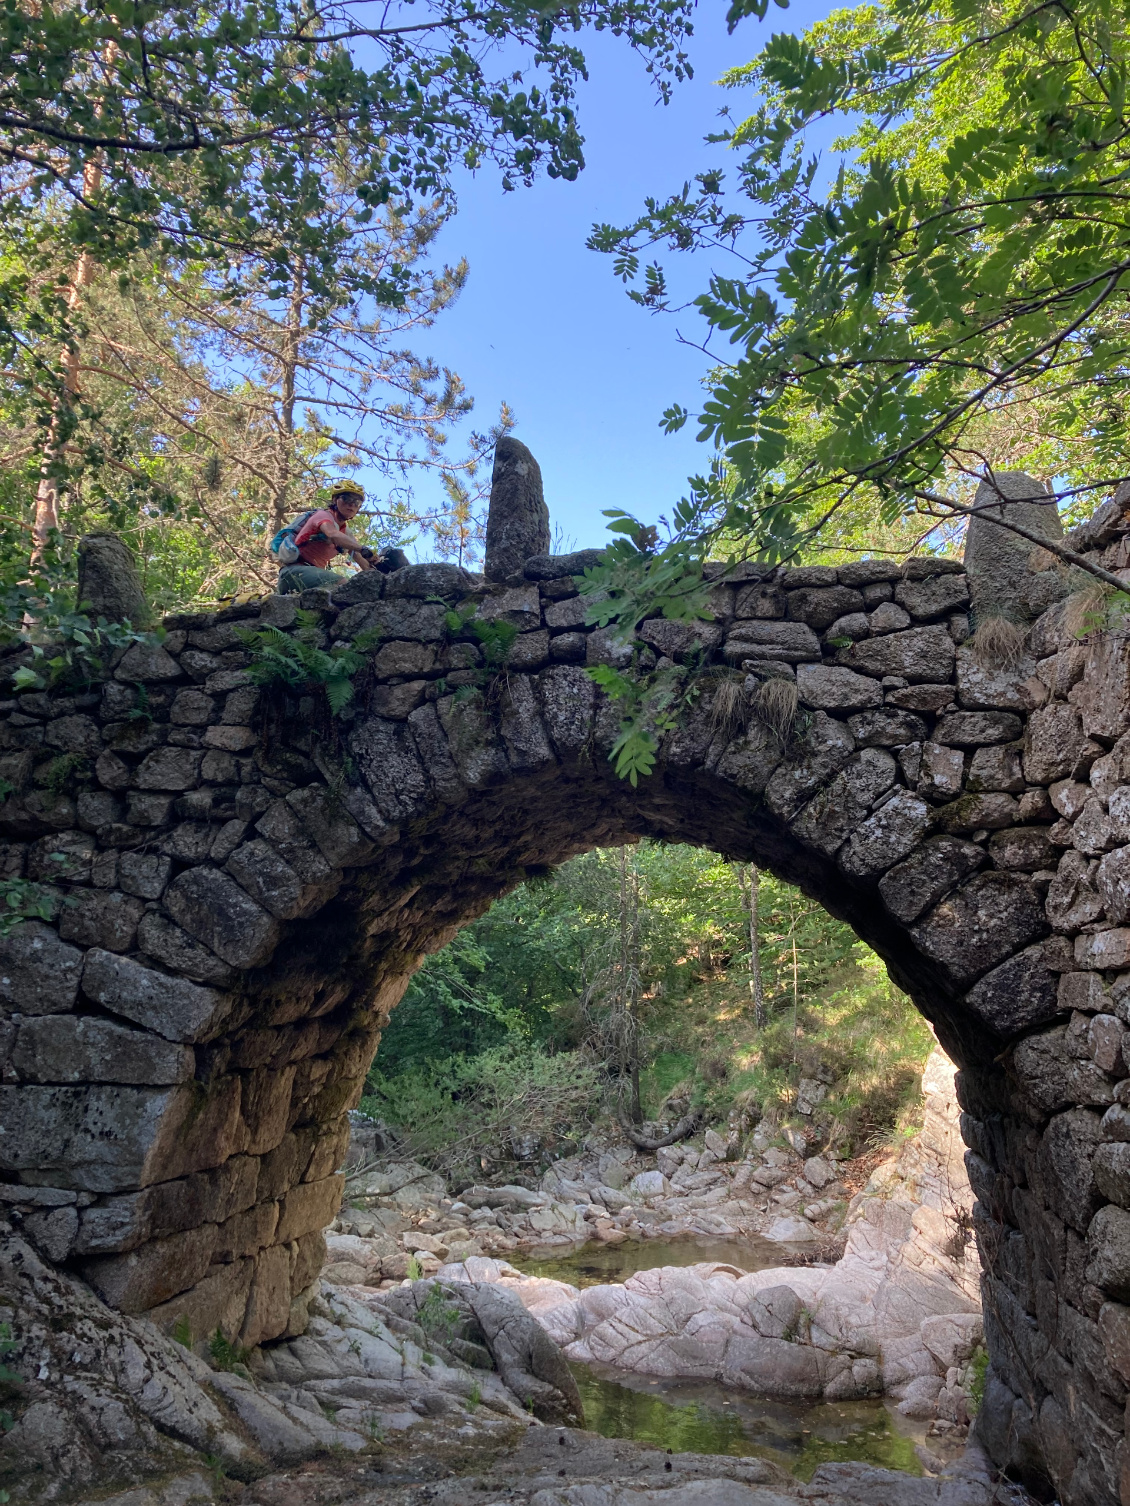 Pont romain de Grizac sur la GTMC.
Photo : Samuel Hubert